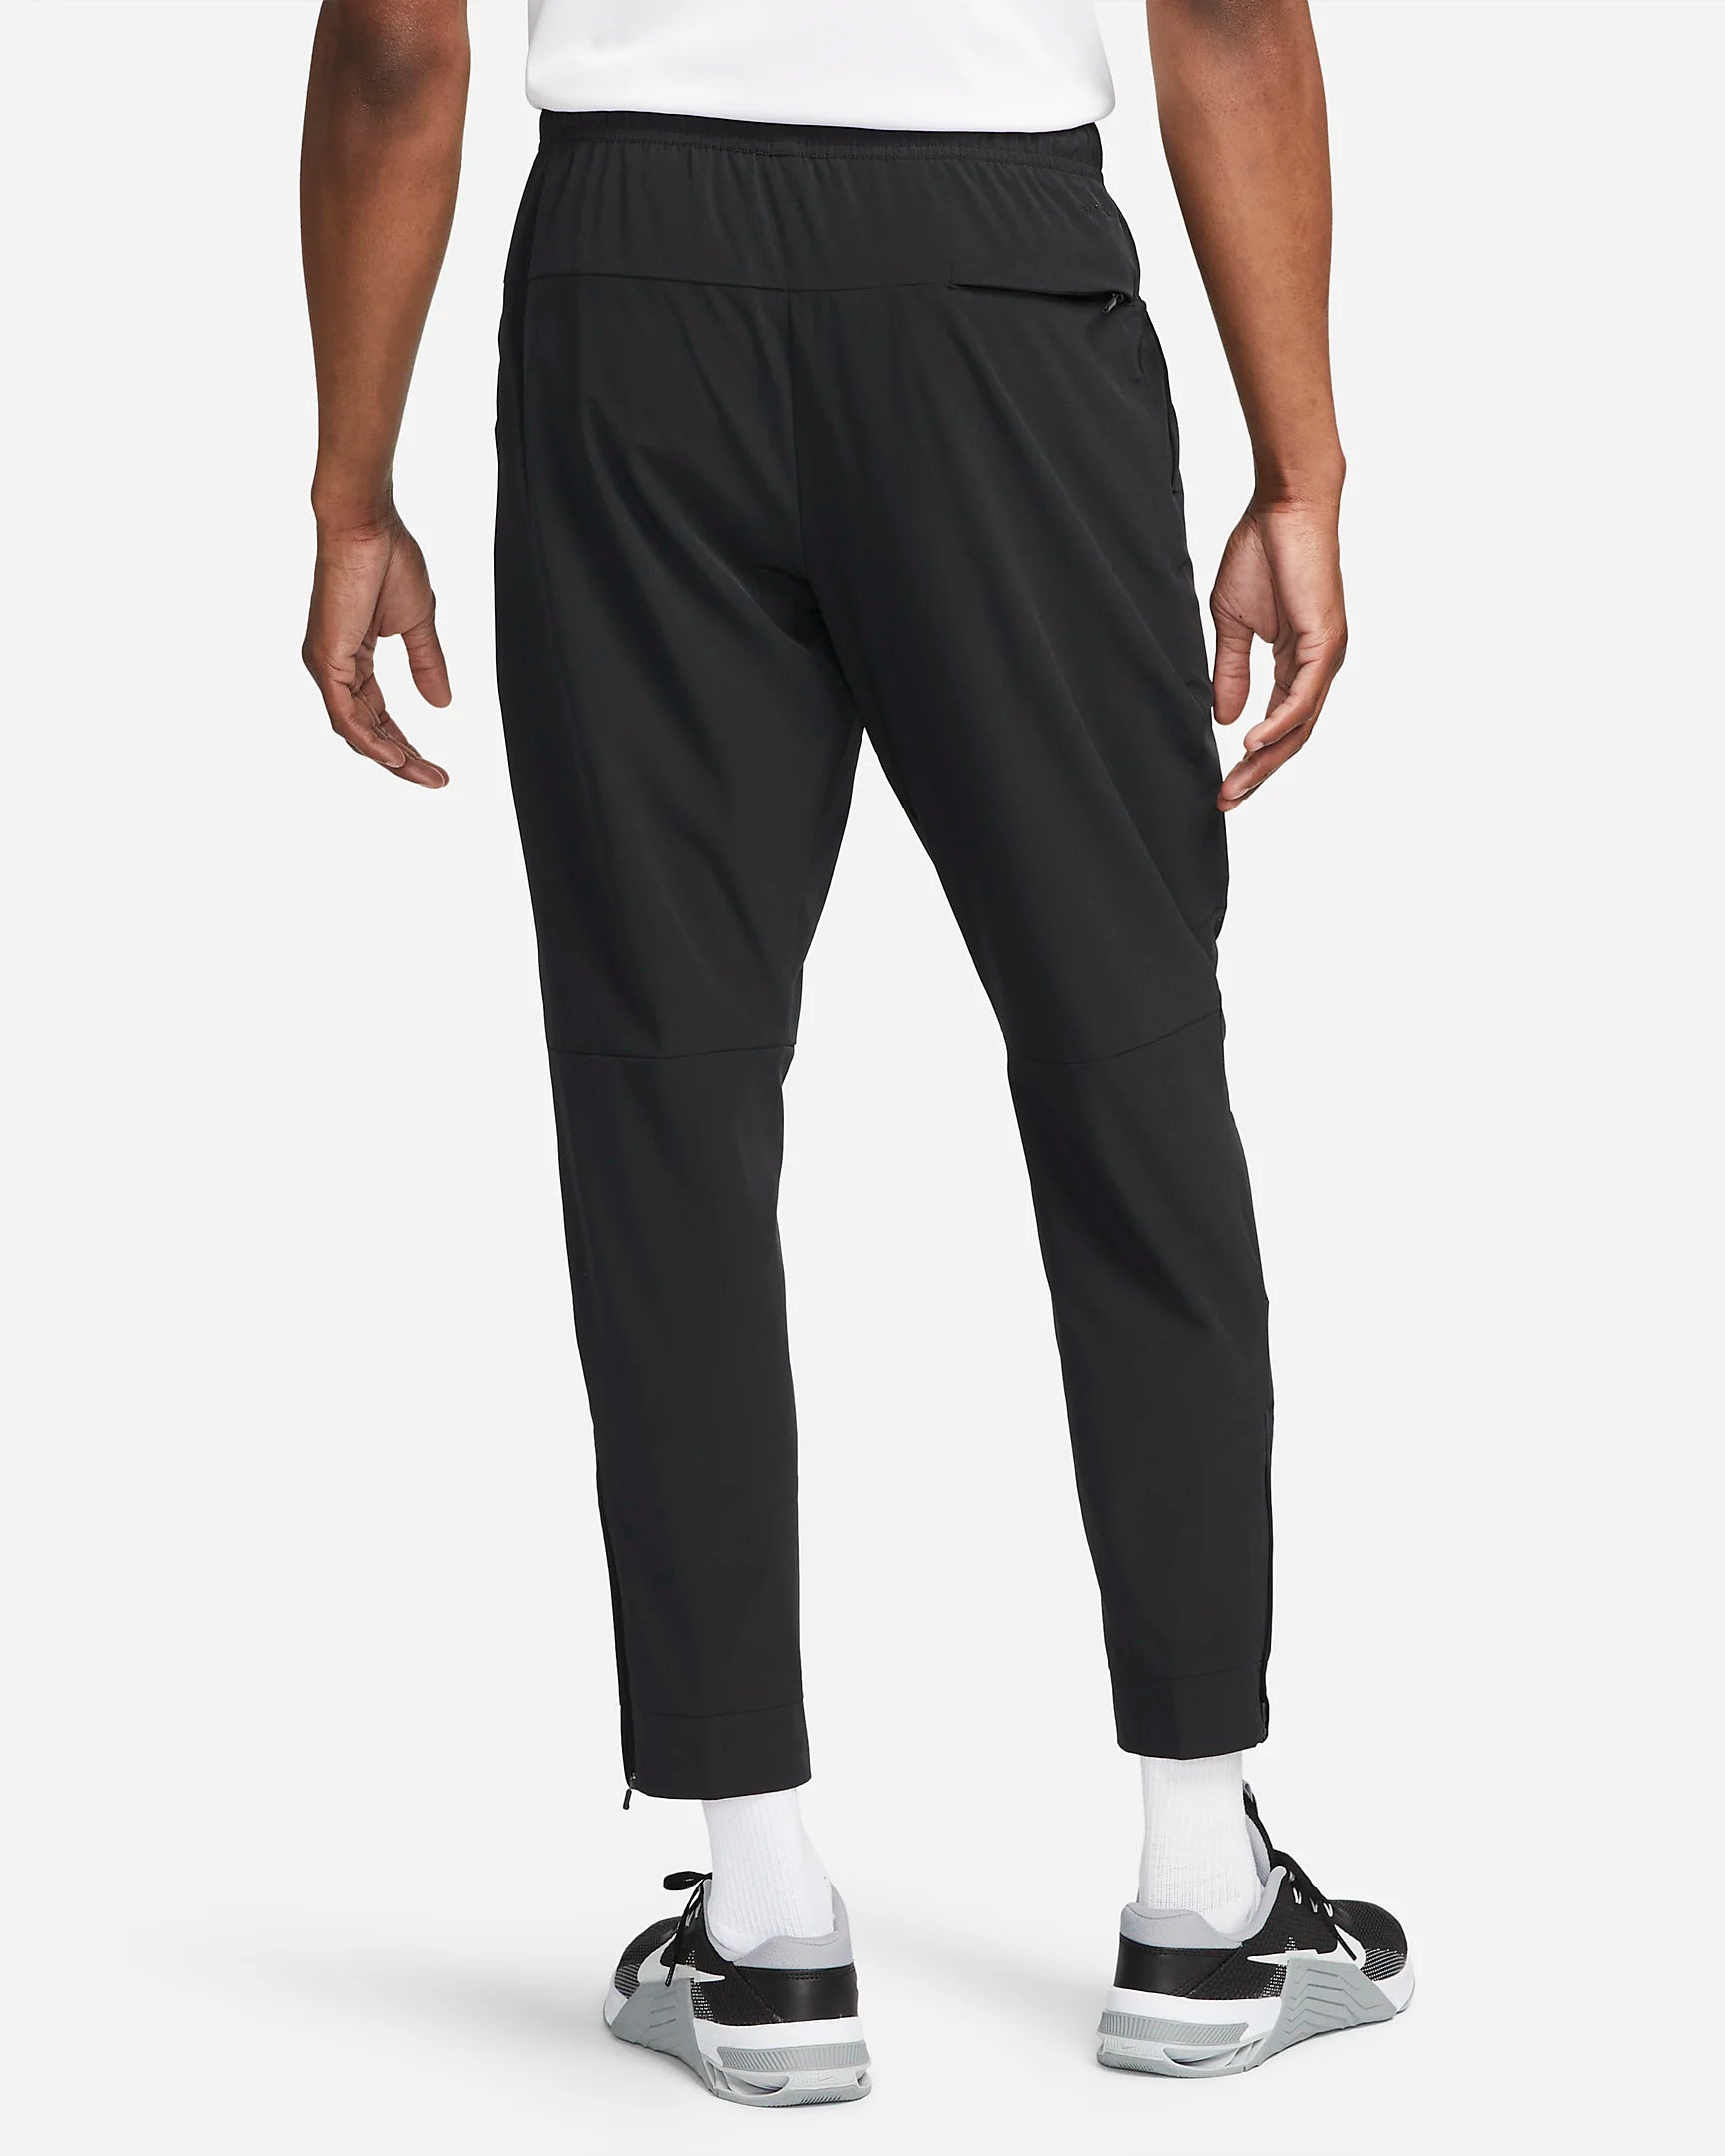 Nike Unlimited jogging pants - Black